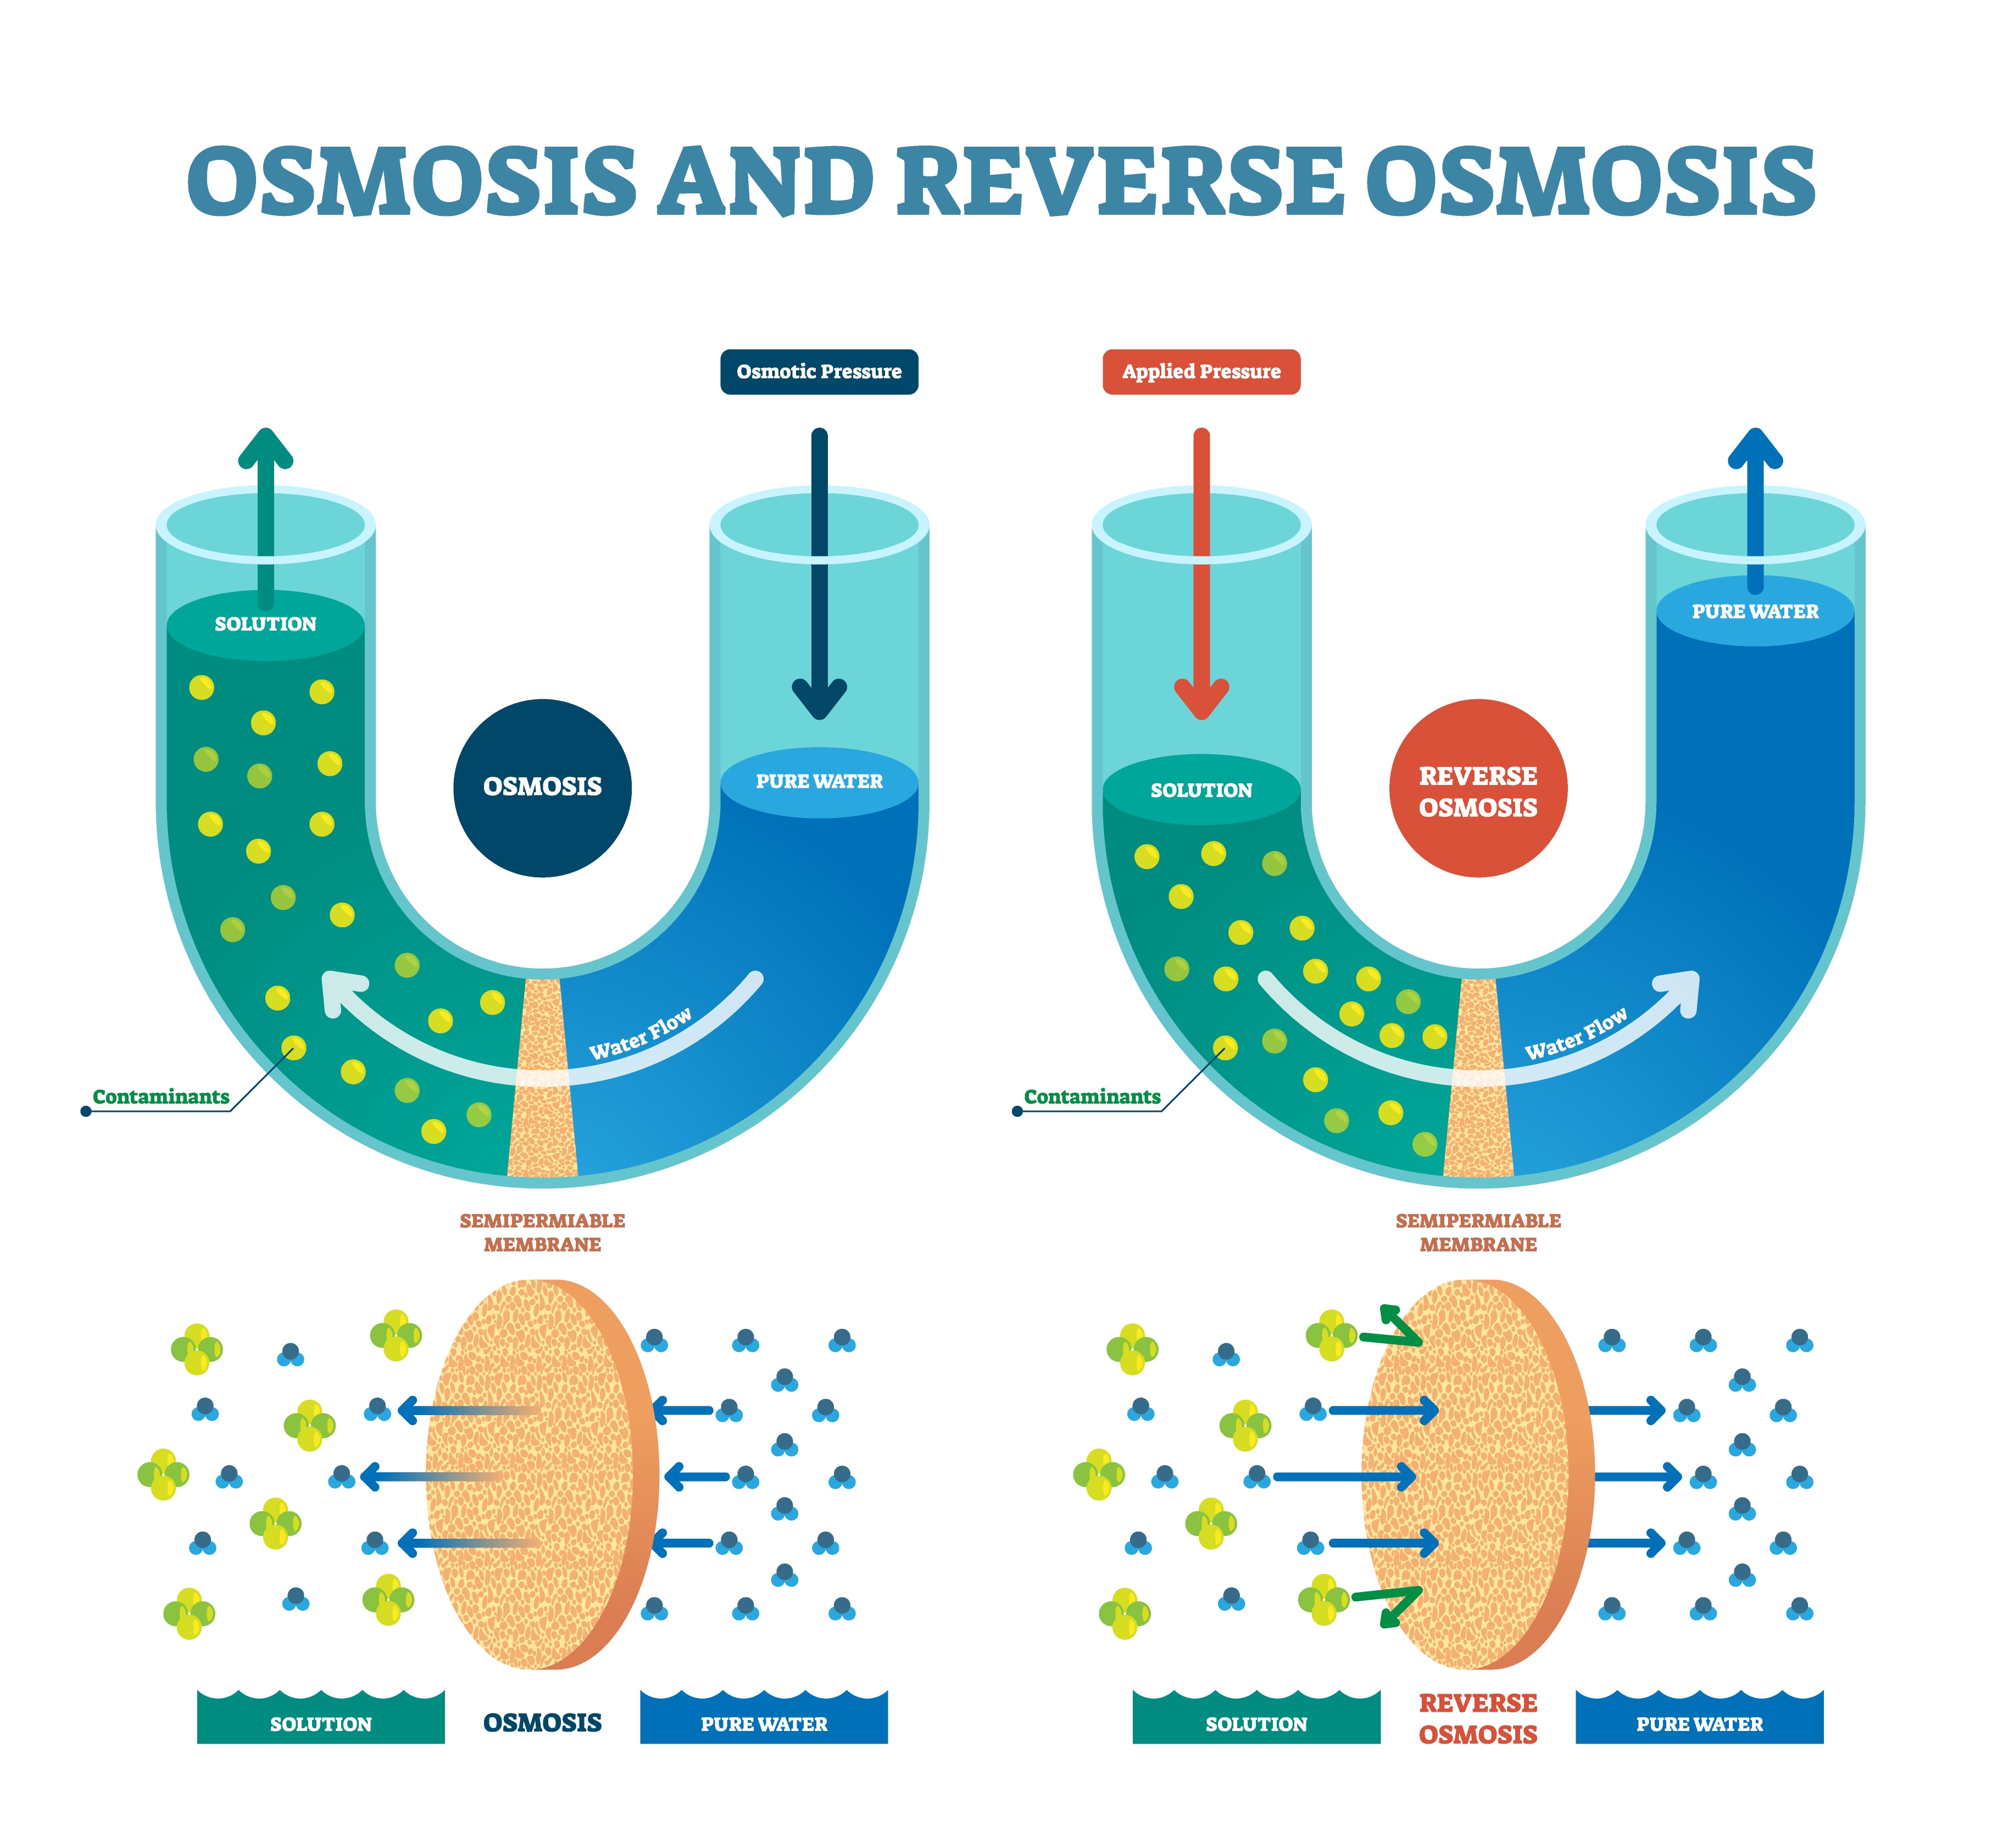 Reverse Osmosis filter